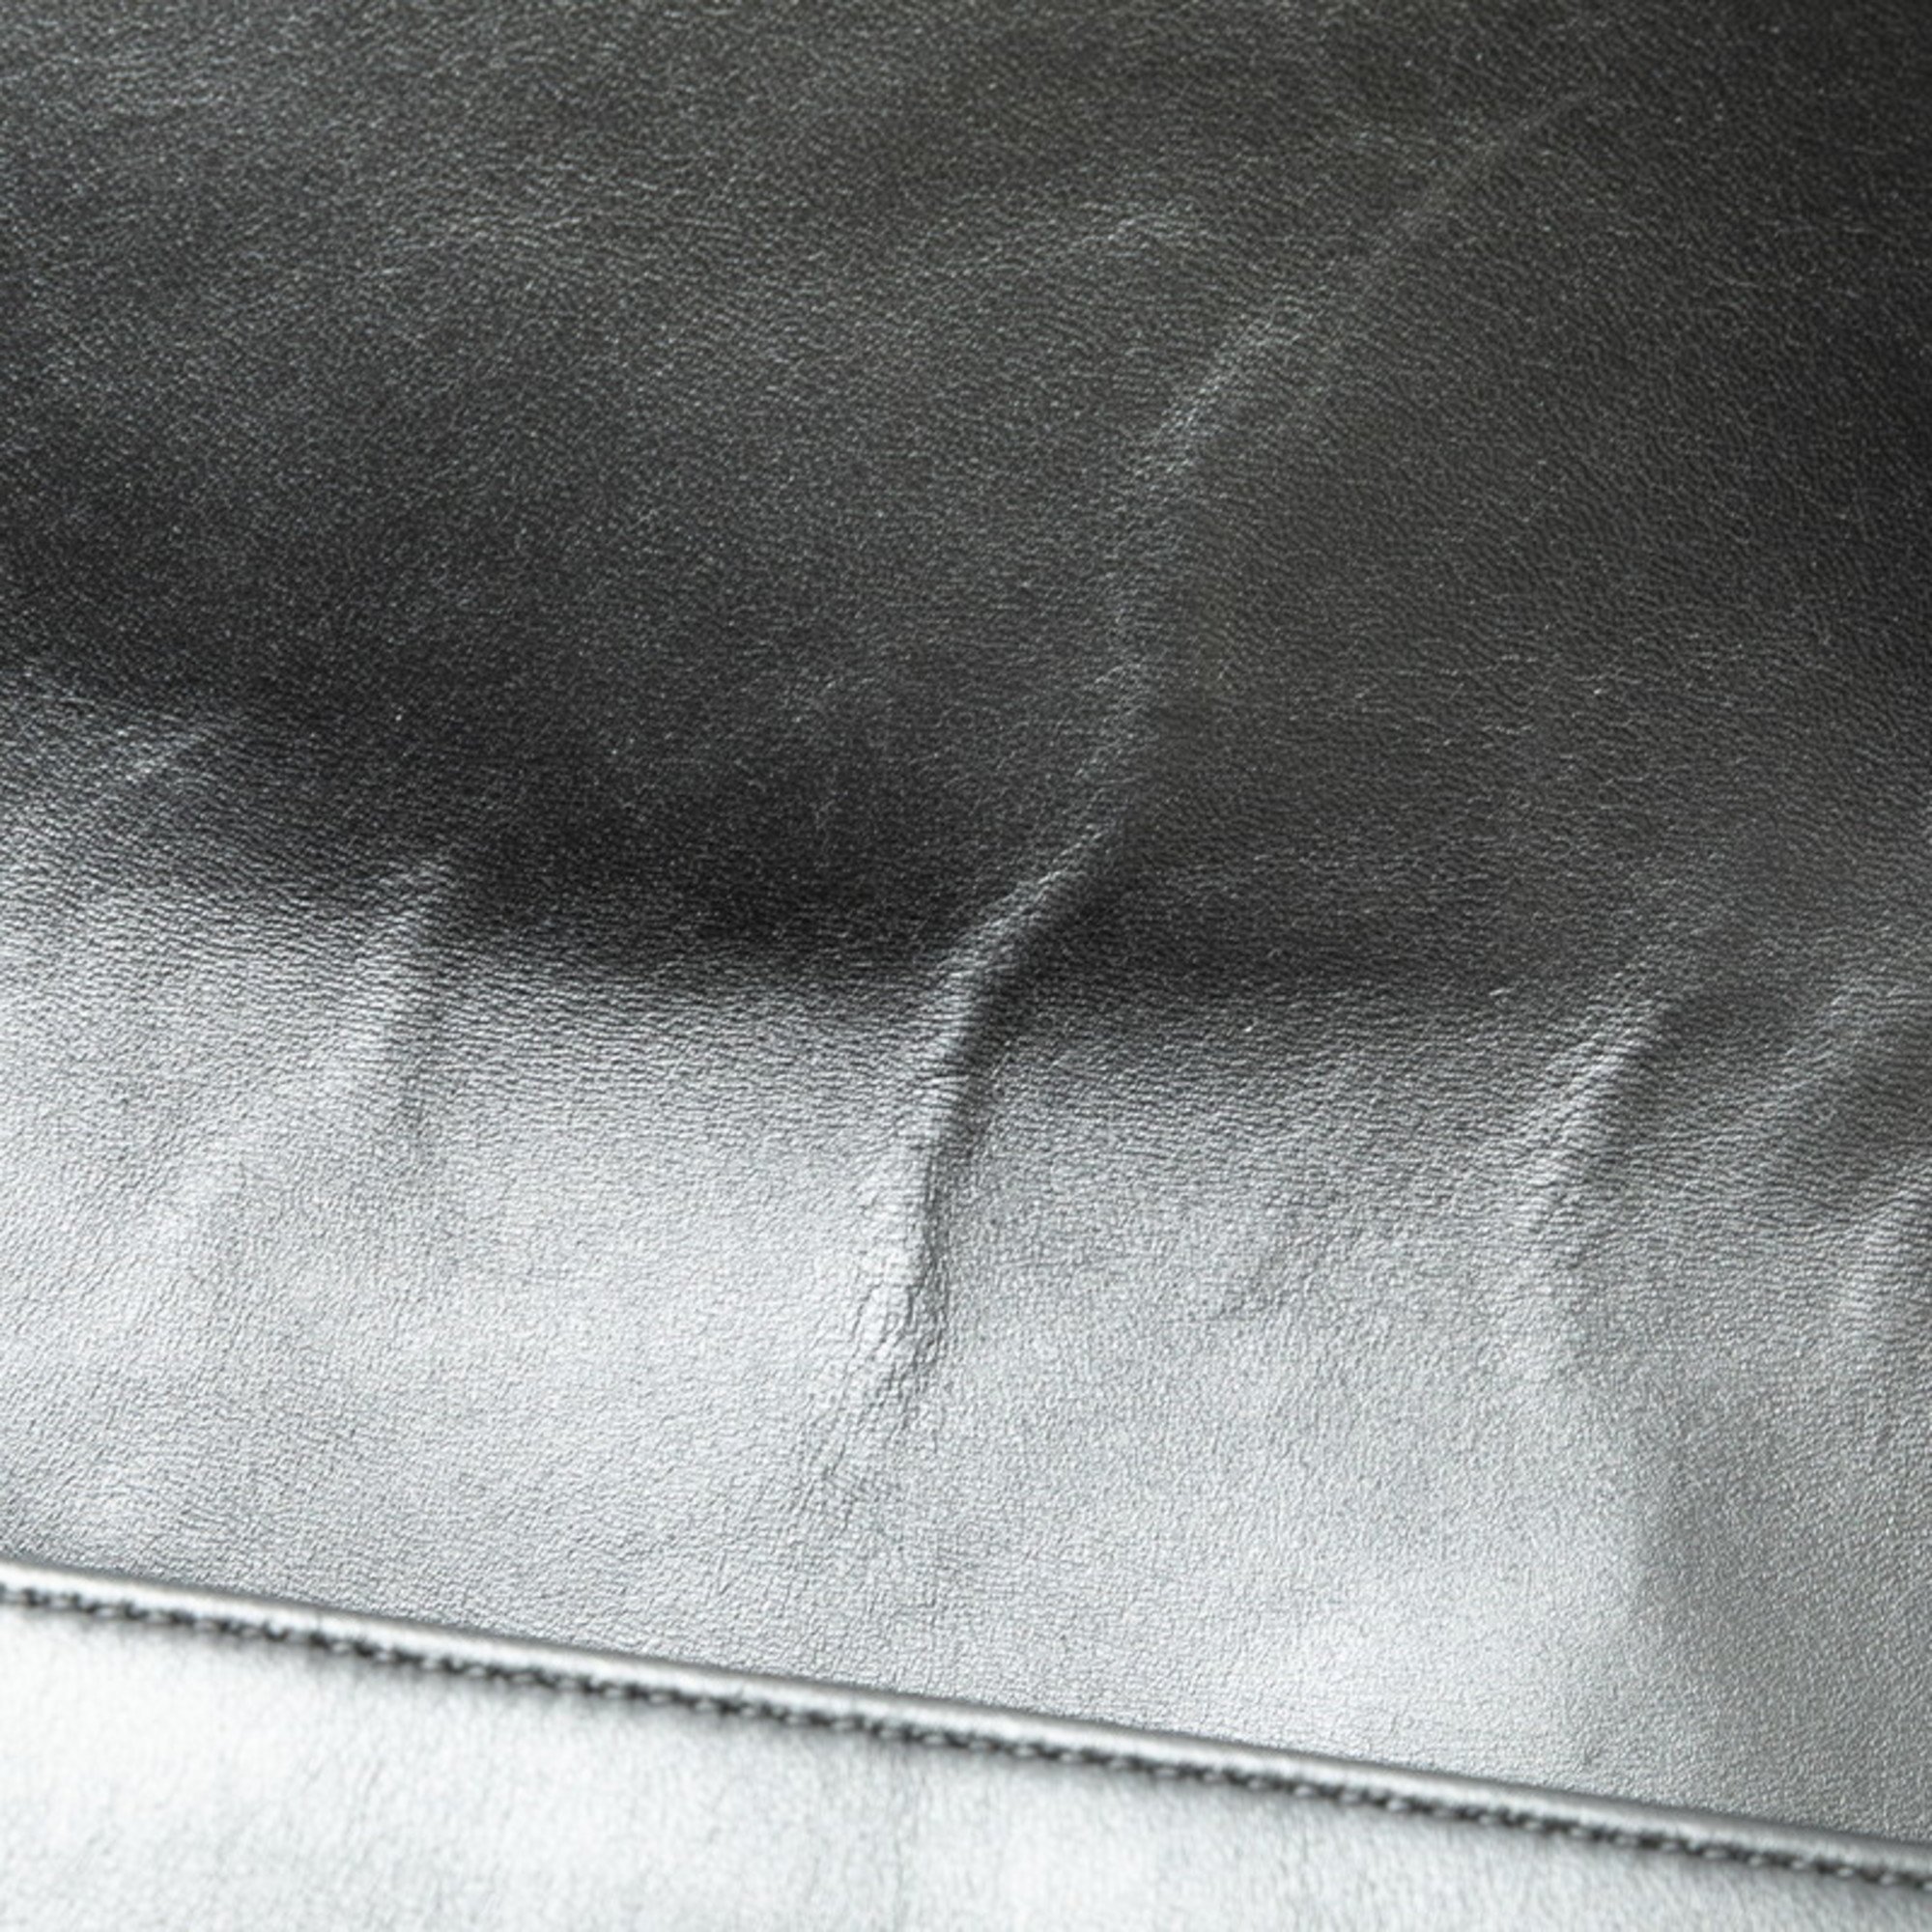 Chanel Boy 25 Chain Shoulder Bag Khaki Silver Leather Suede Women's CHANEL